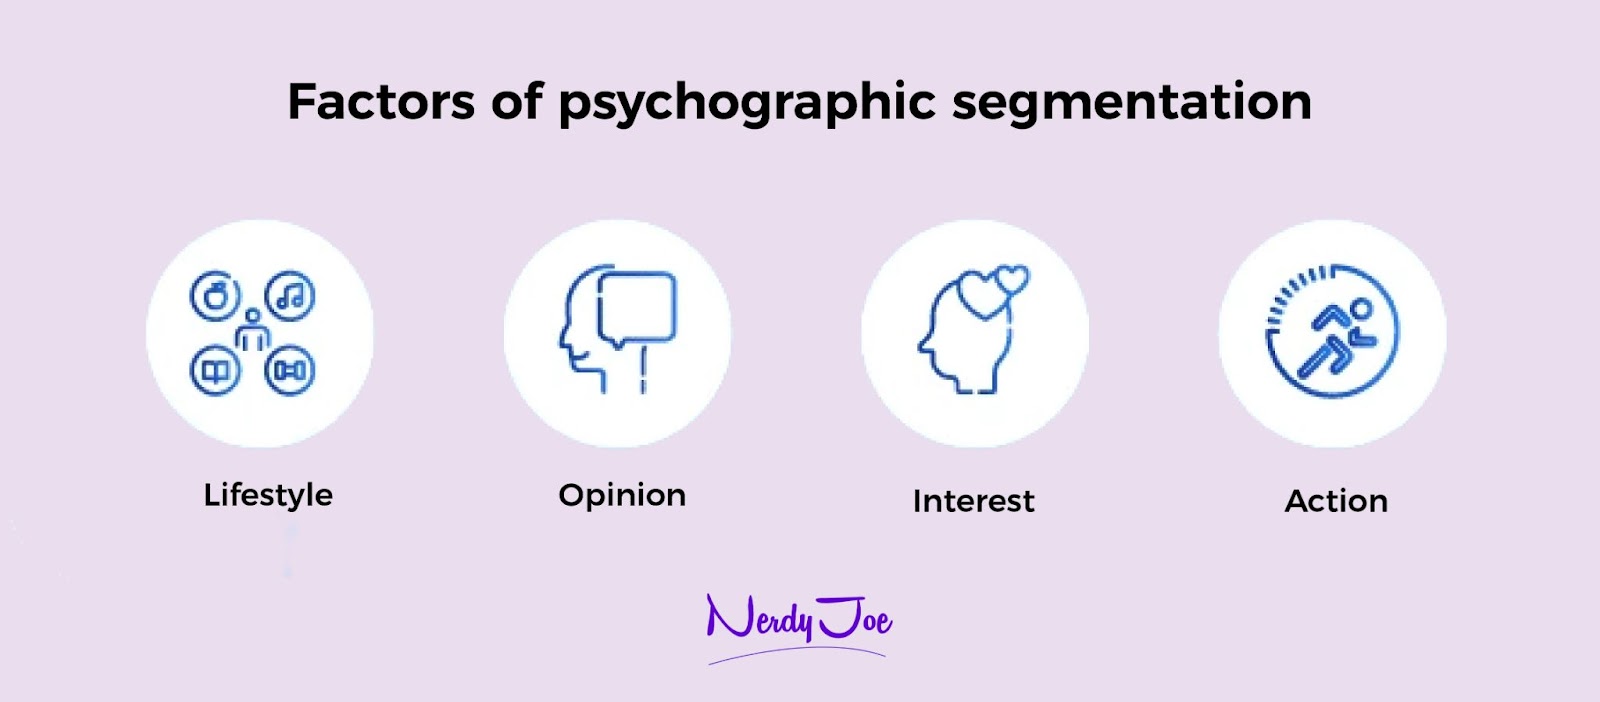 create segments based on psychographic data